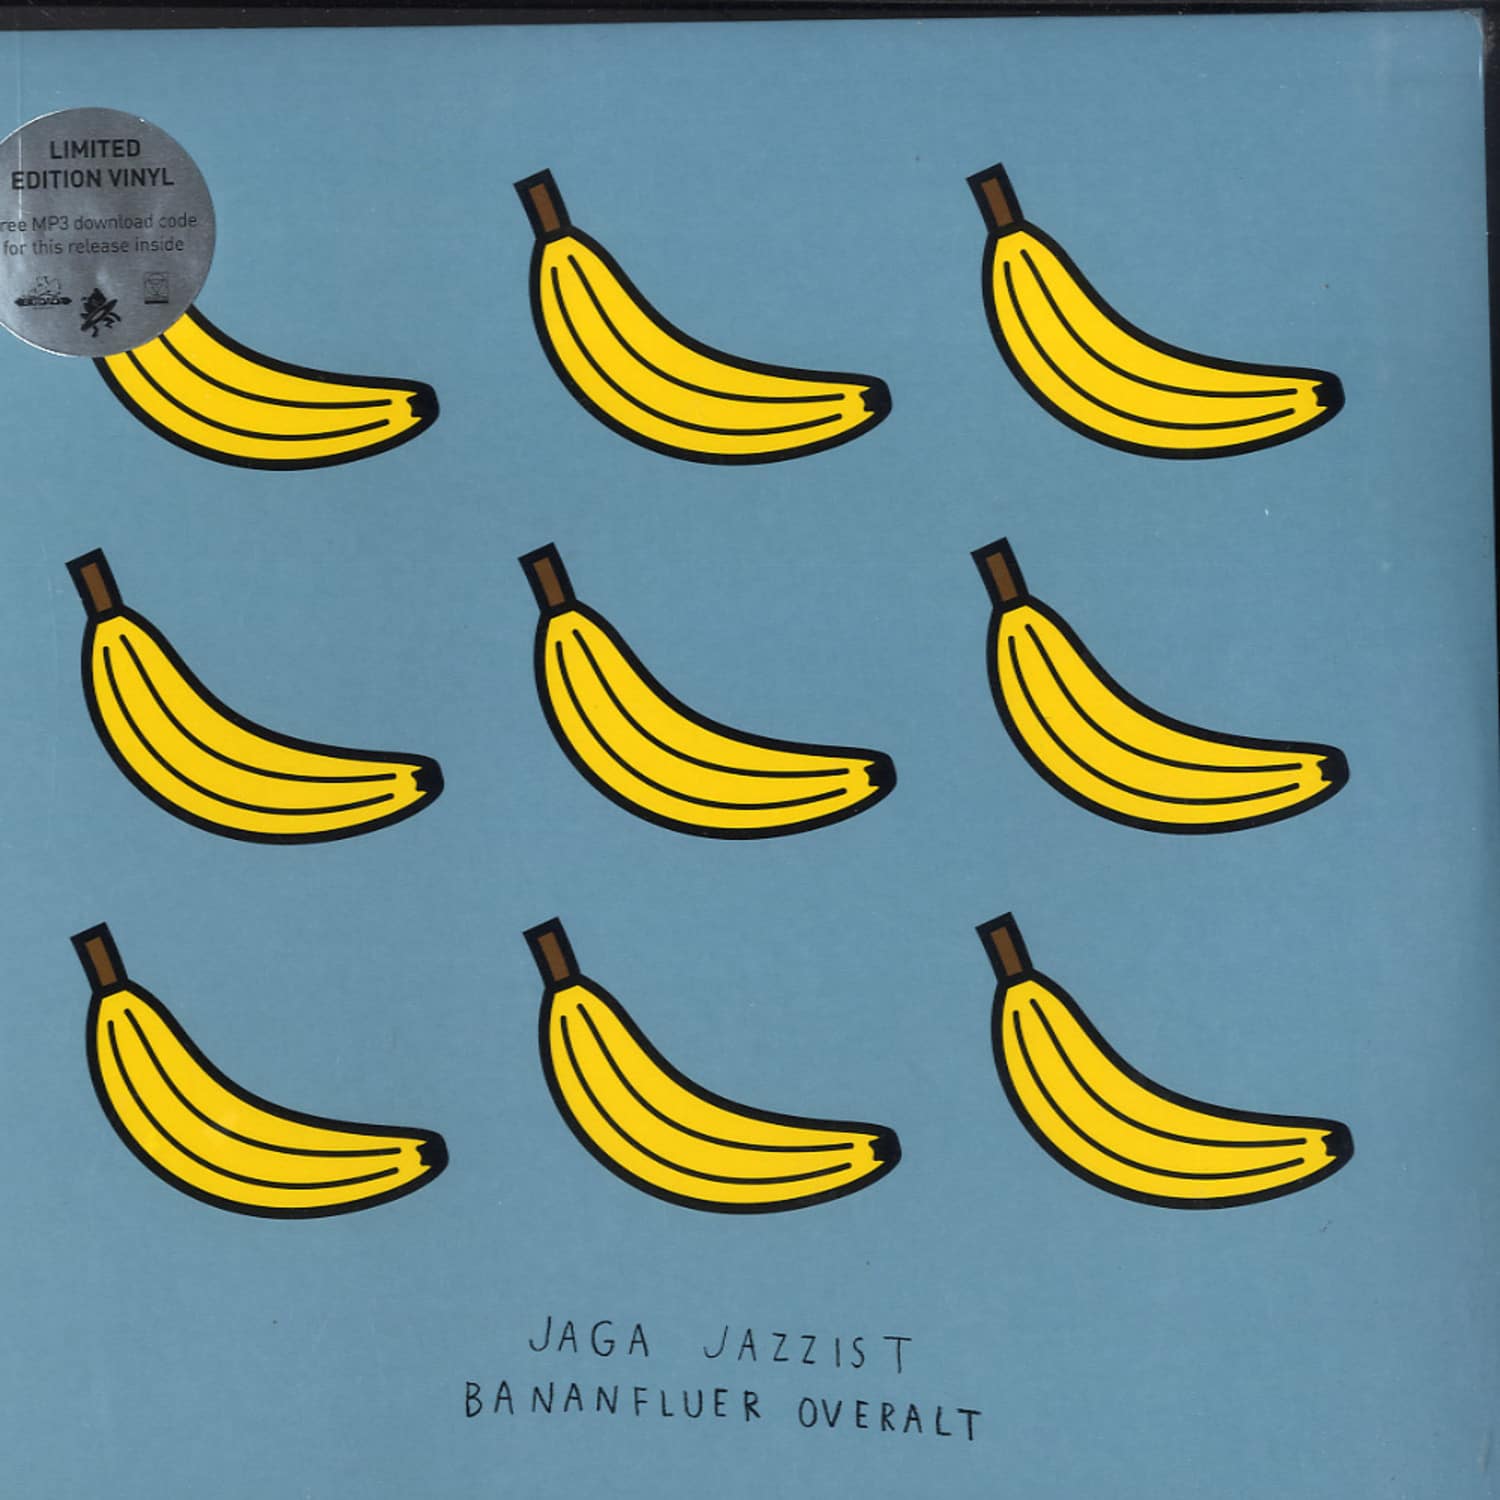 Jaga Jazzist - BANANFLUER OVERALT EP 